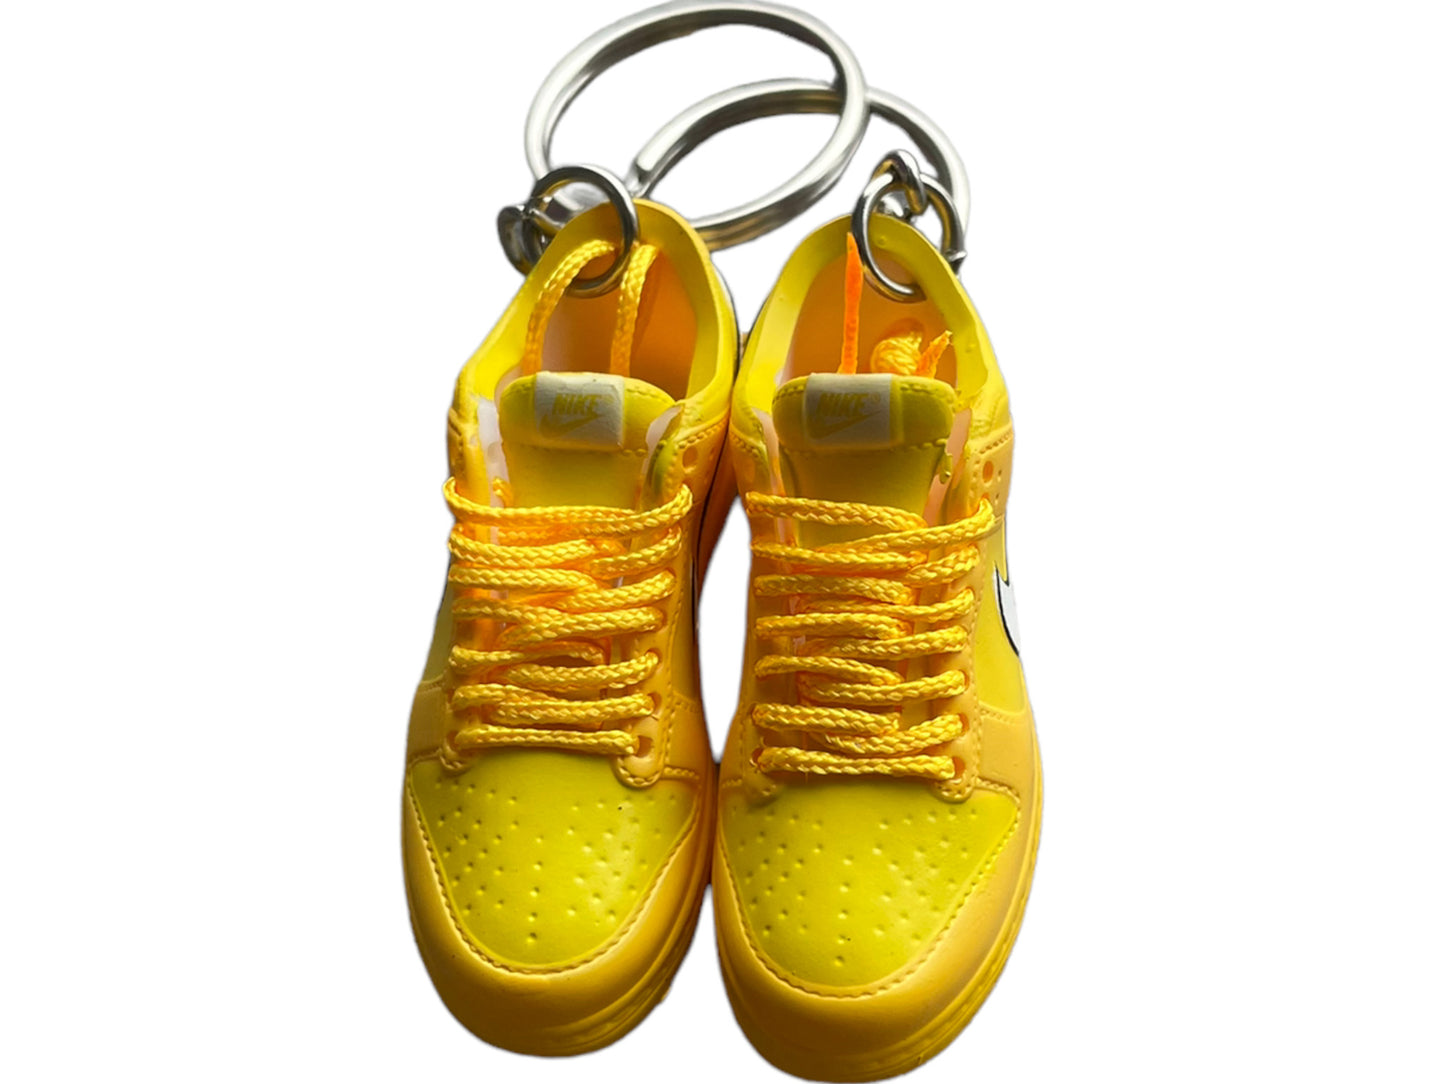 Mini sneaker keychain 3D Dunk - Yellow